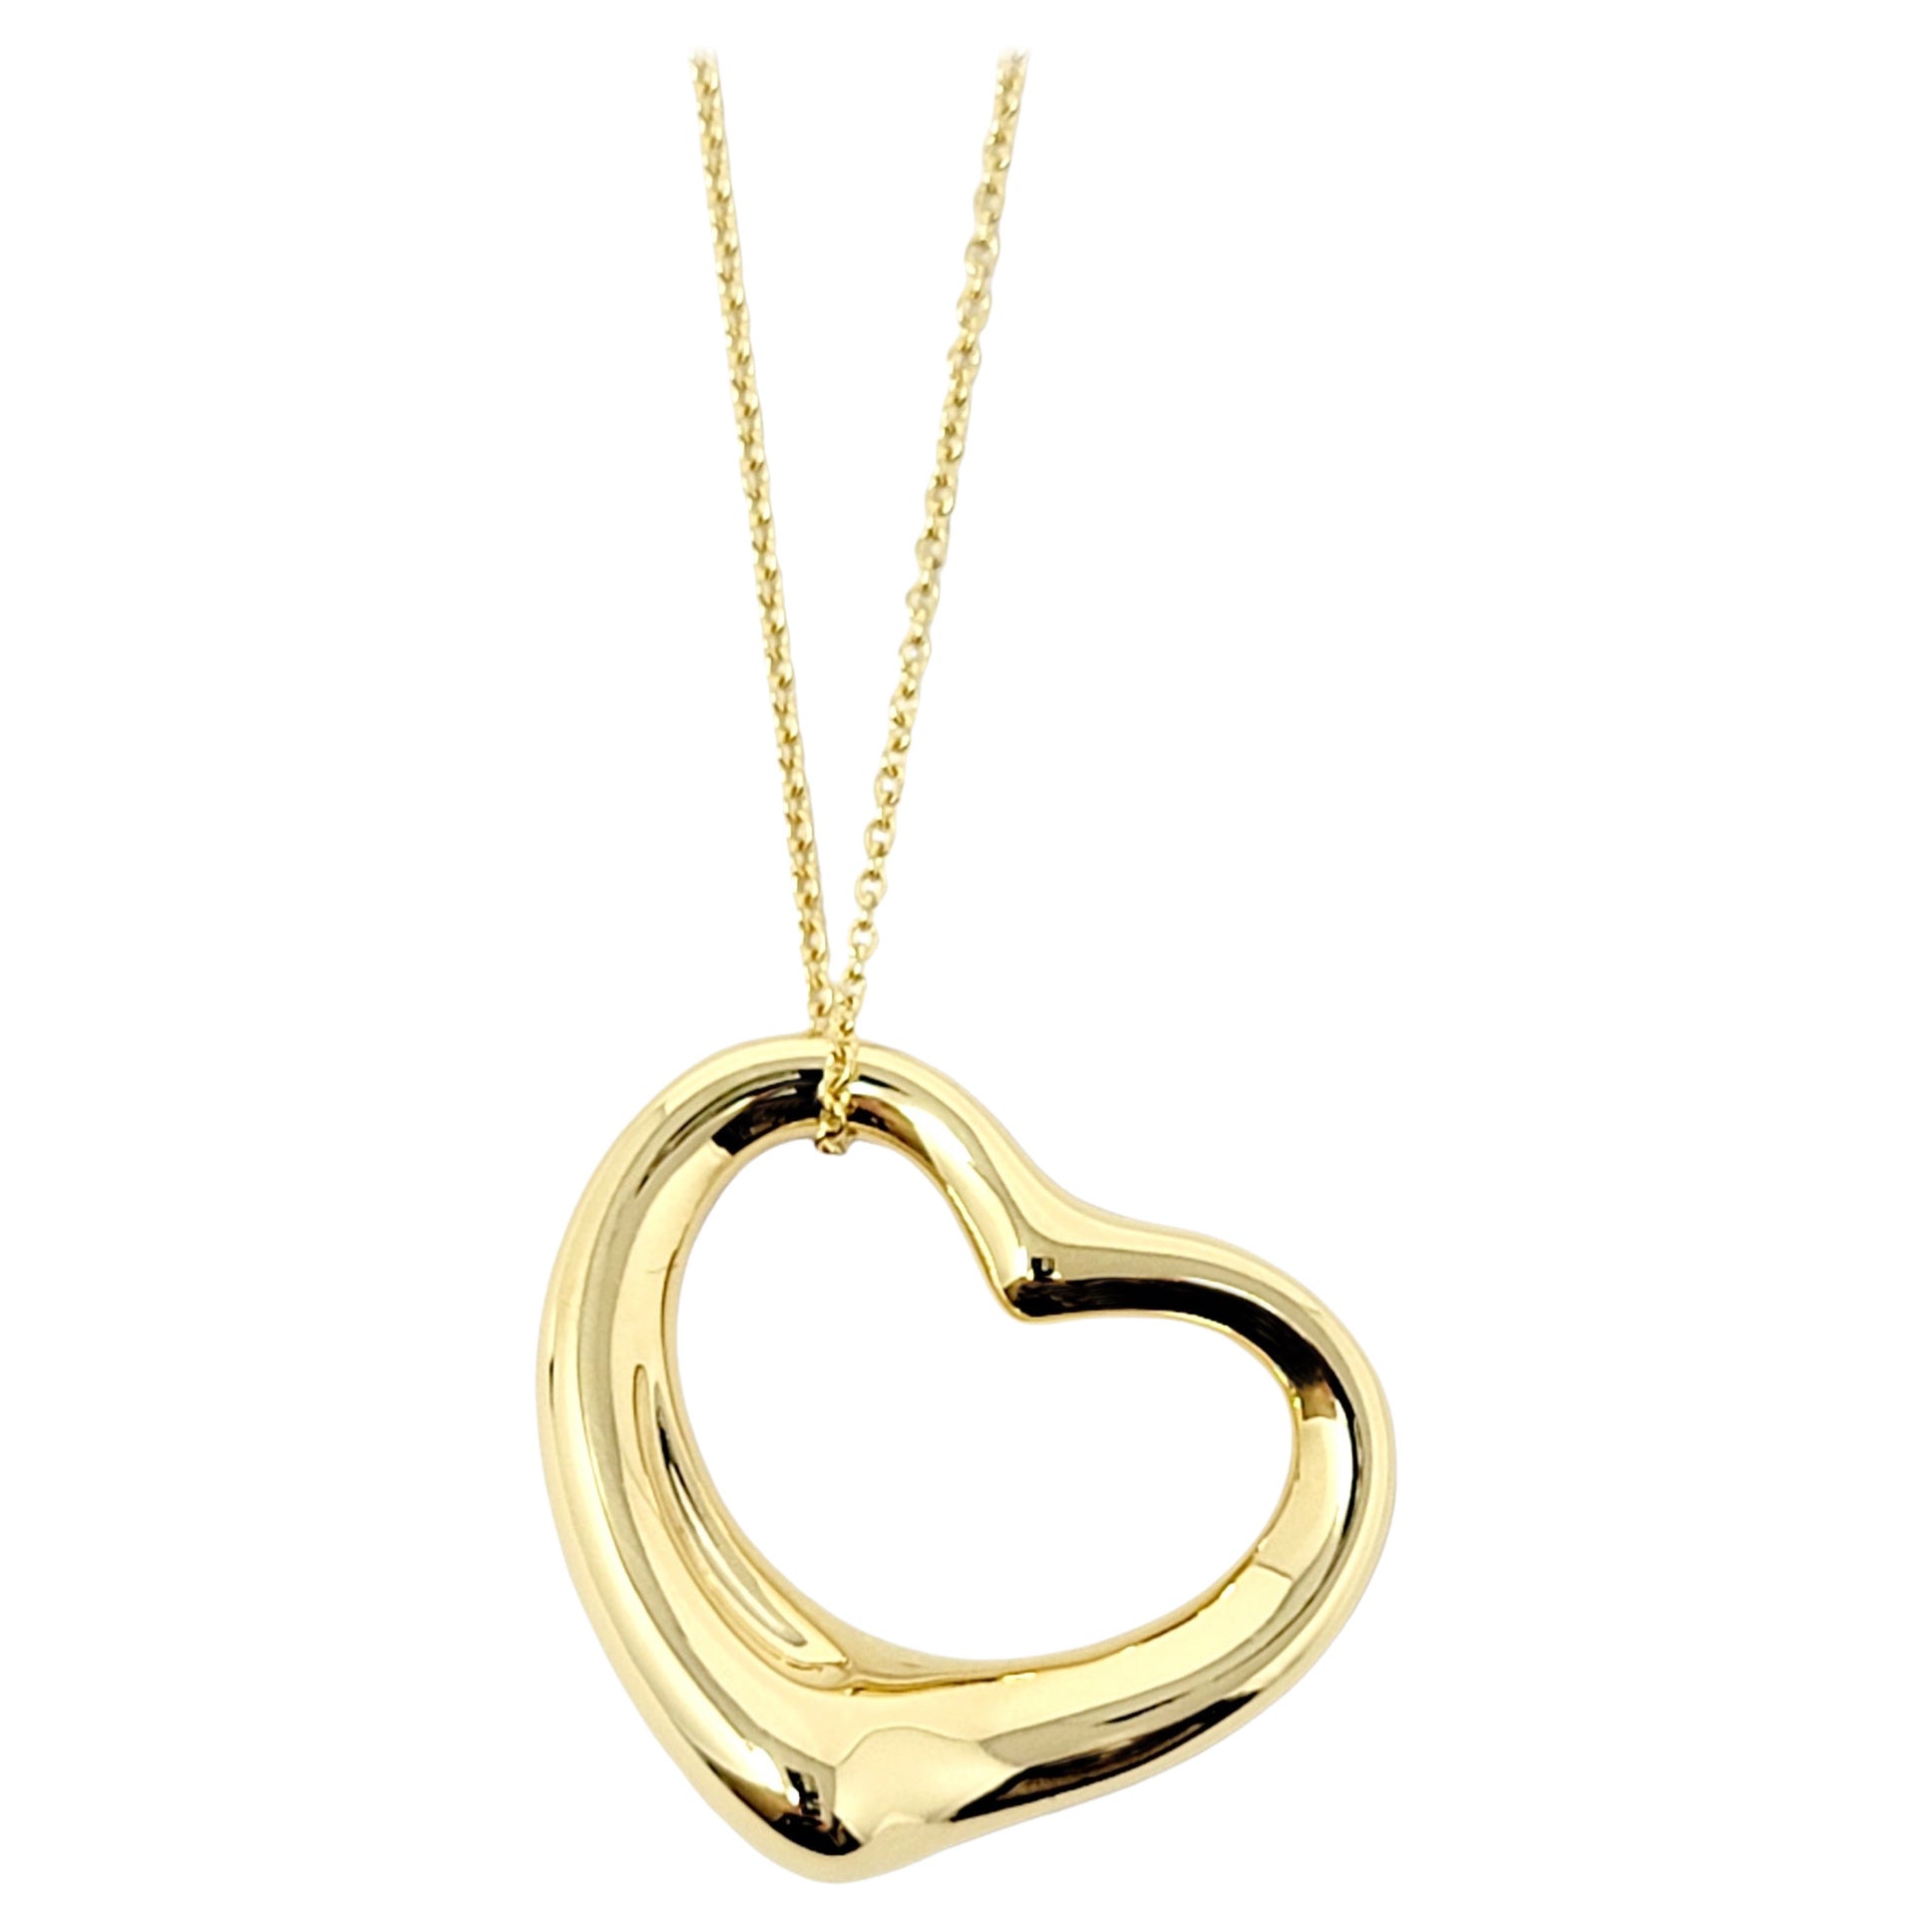 Elsa Peretti for Tiffany & Co. 18 Karat Yellow Gold Open Heart Pendant Necklace